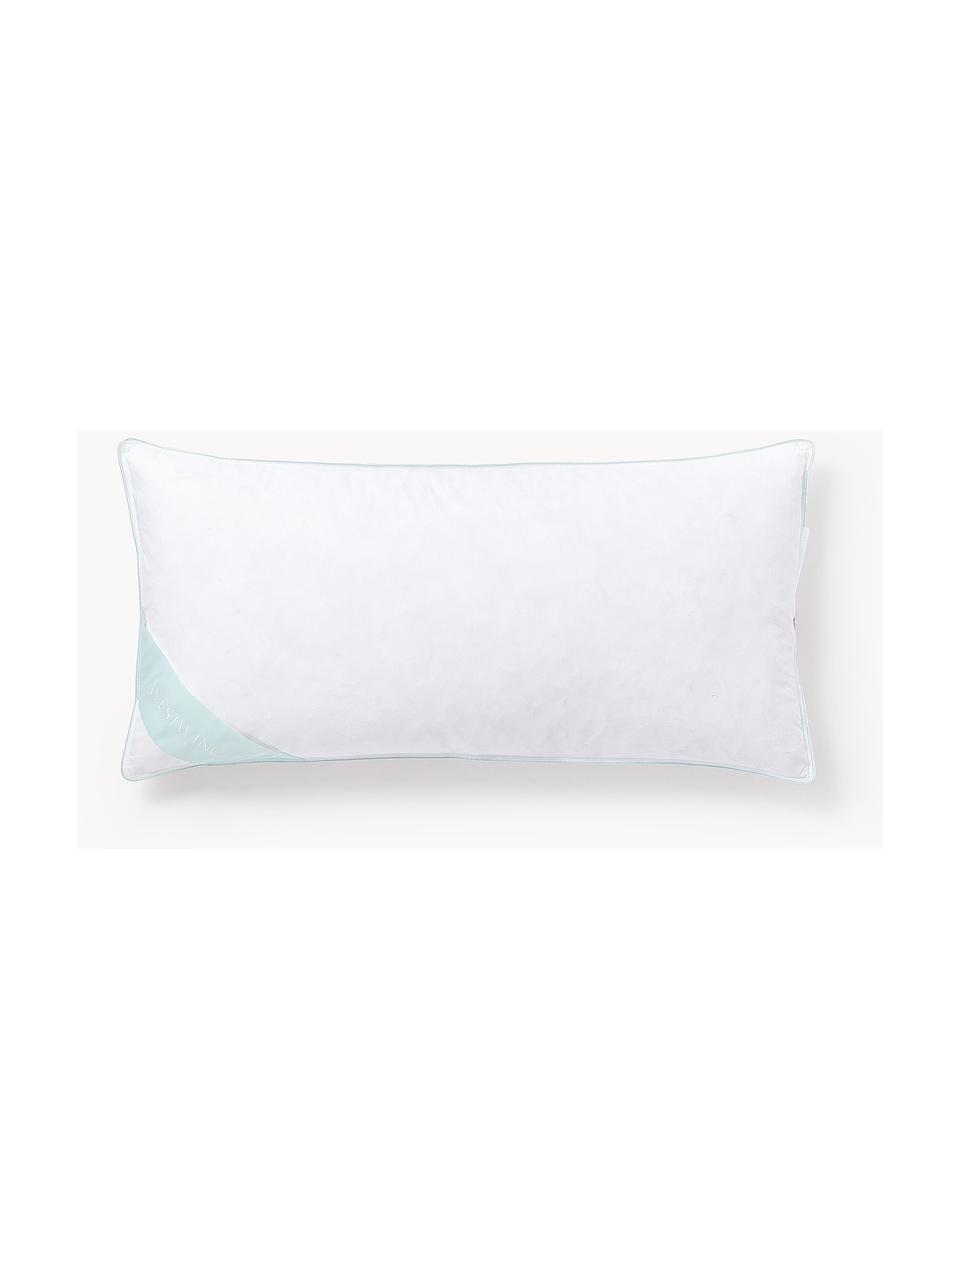 Feder-Kopfkissen Comfort, fest, Hülle: 100% Baumwolle, Mako-Köpe, Off White, B 40 x L 80 cm